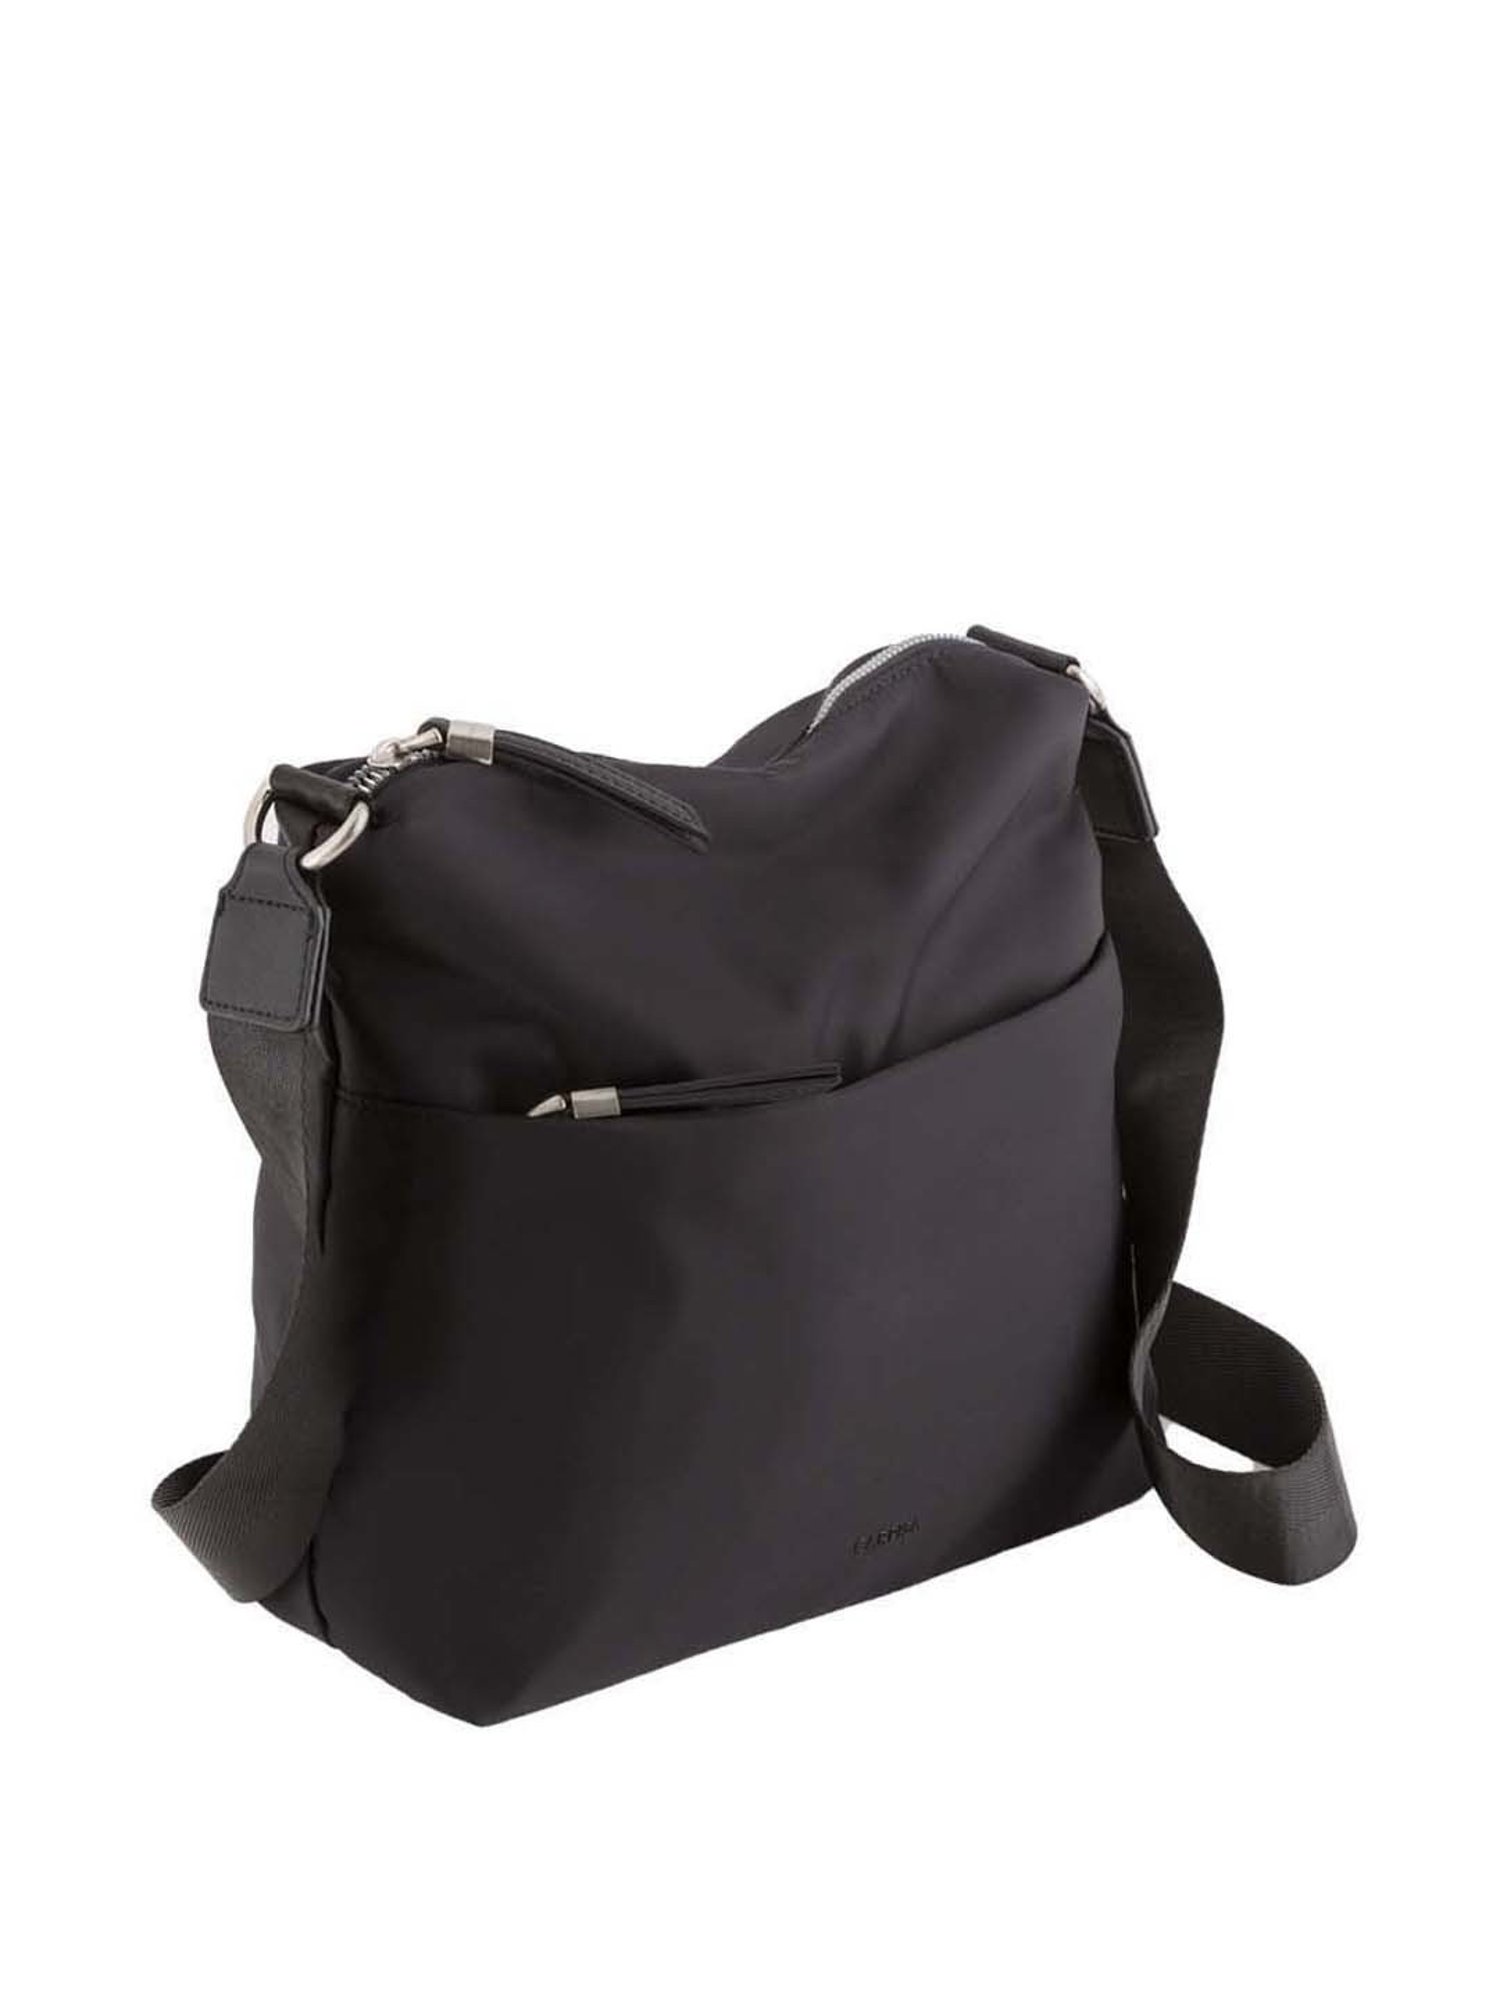 Raja Leather Nylon Black Sling Bag For Casual Wear